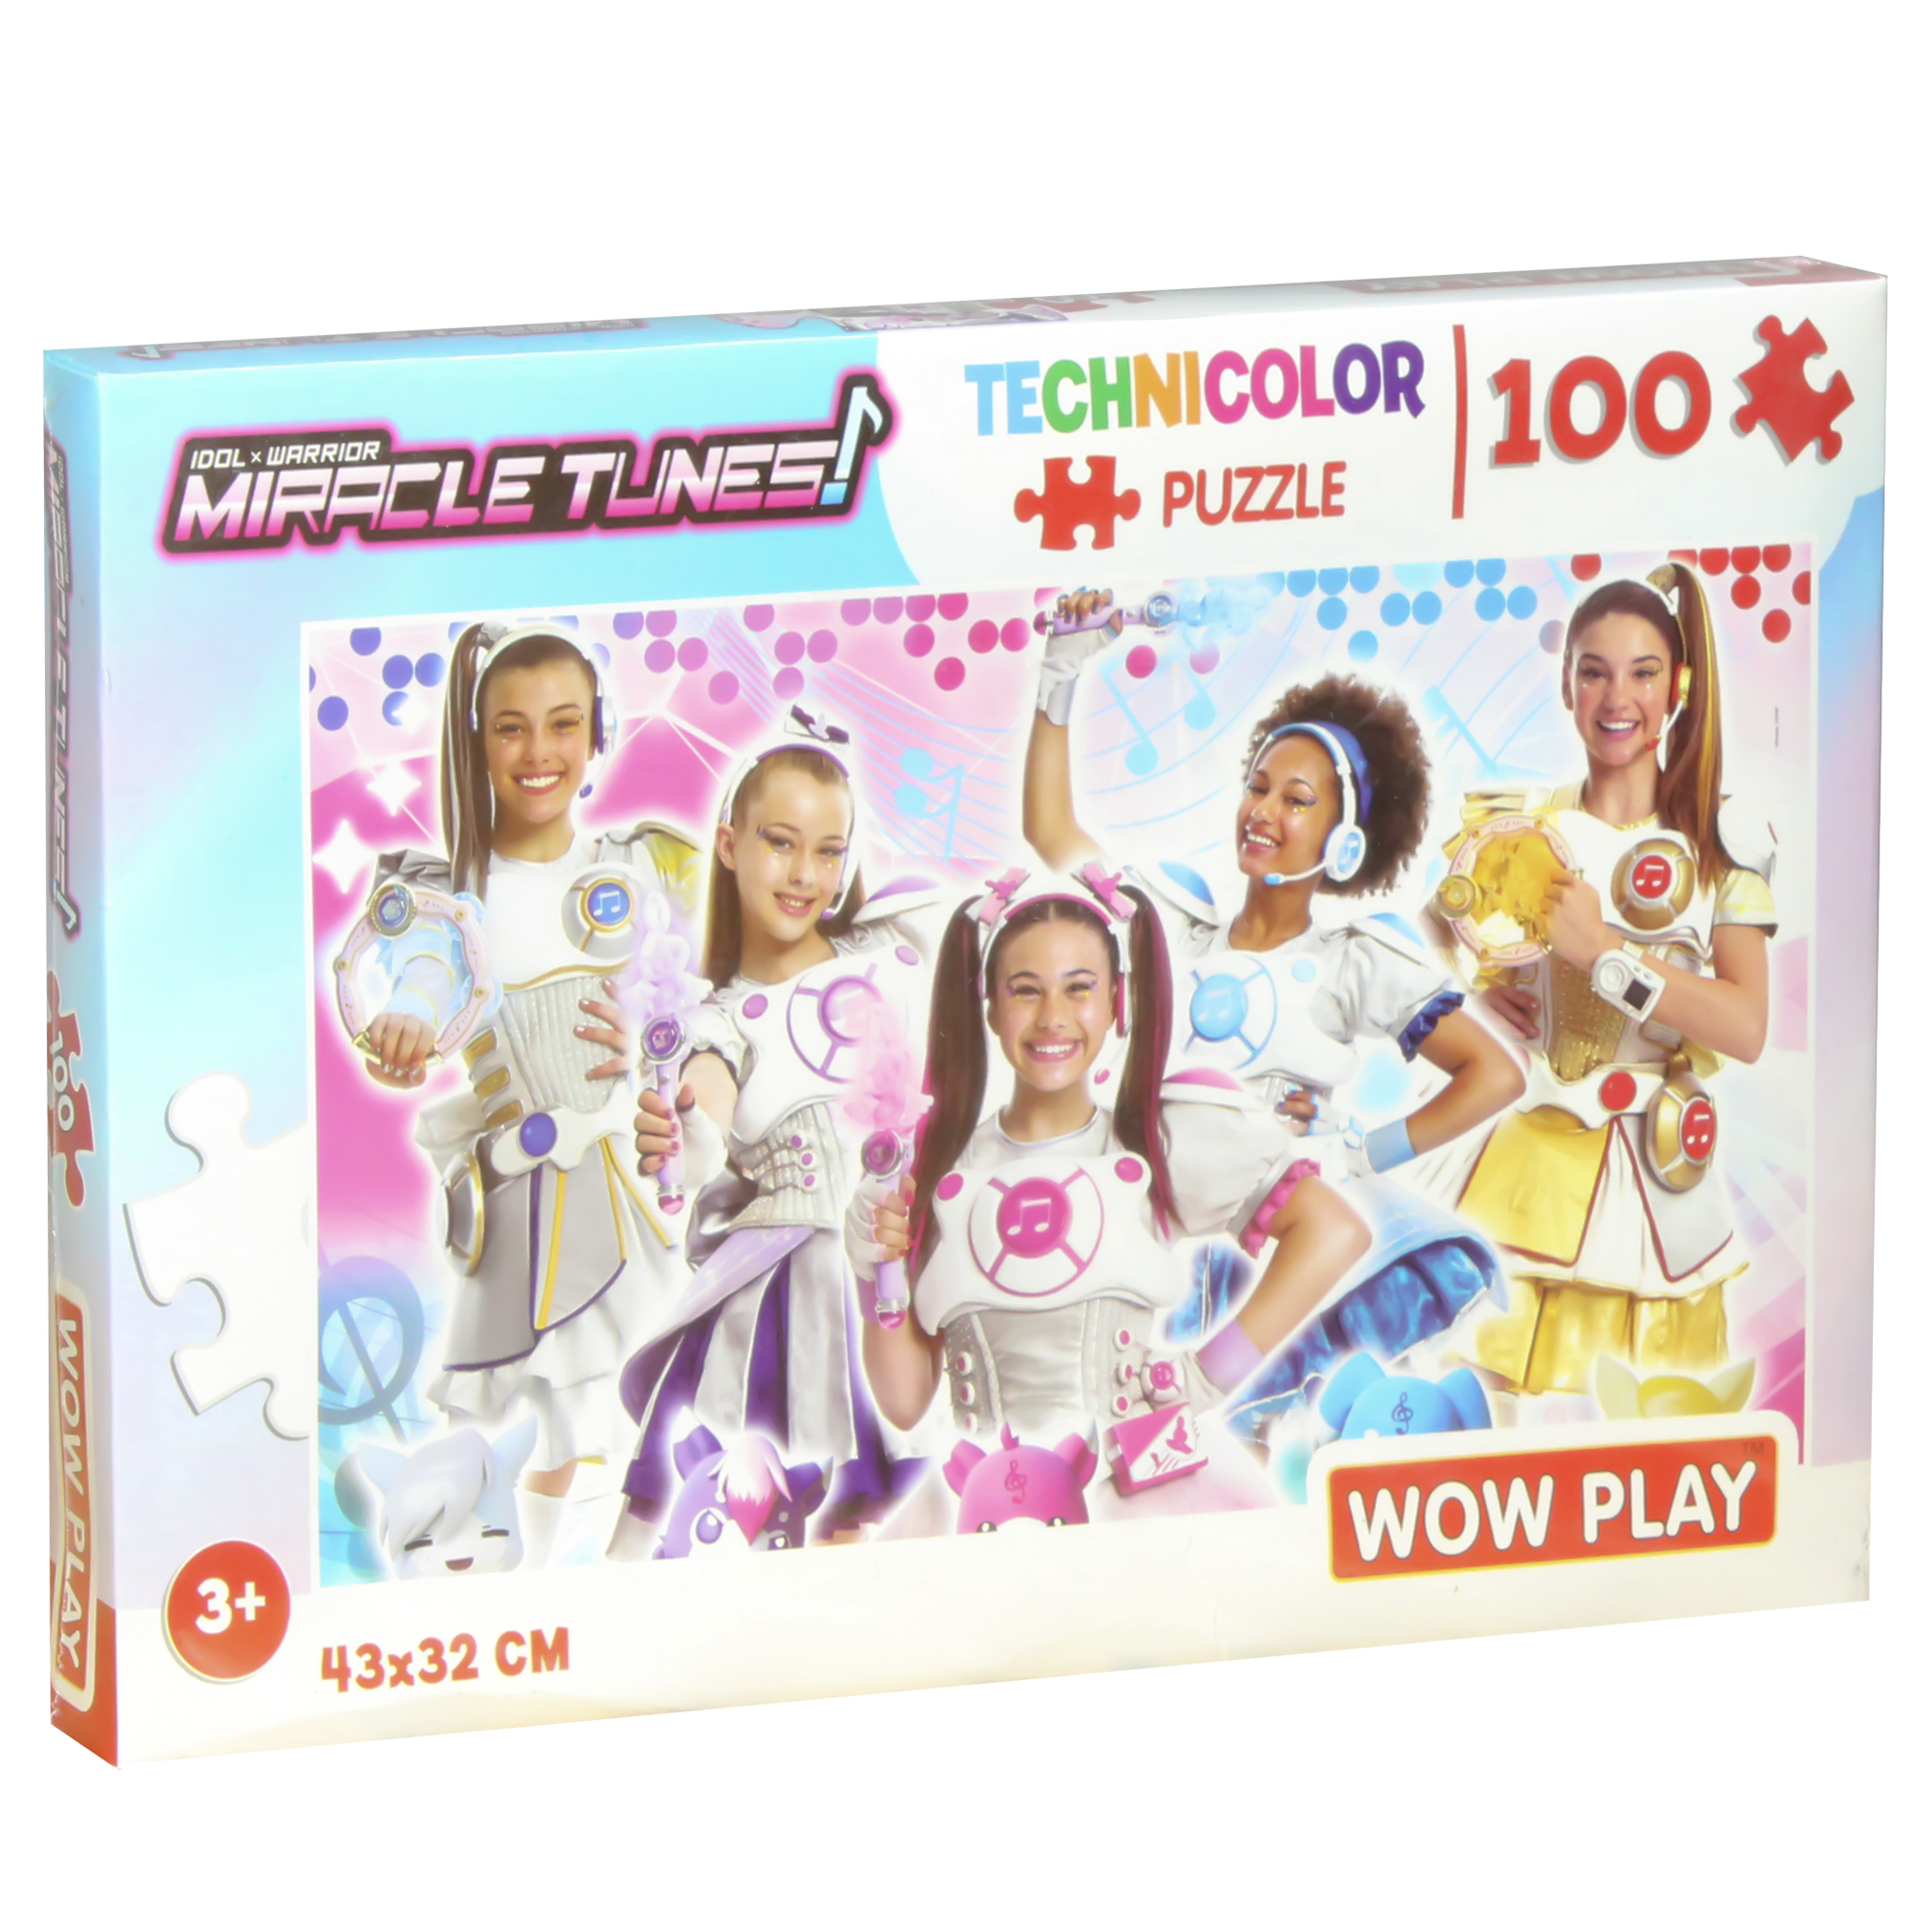 Wow Play Technicolour Puzzle 100 pieces 